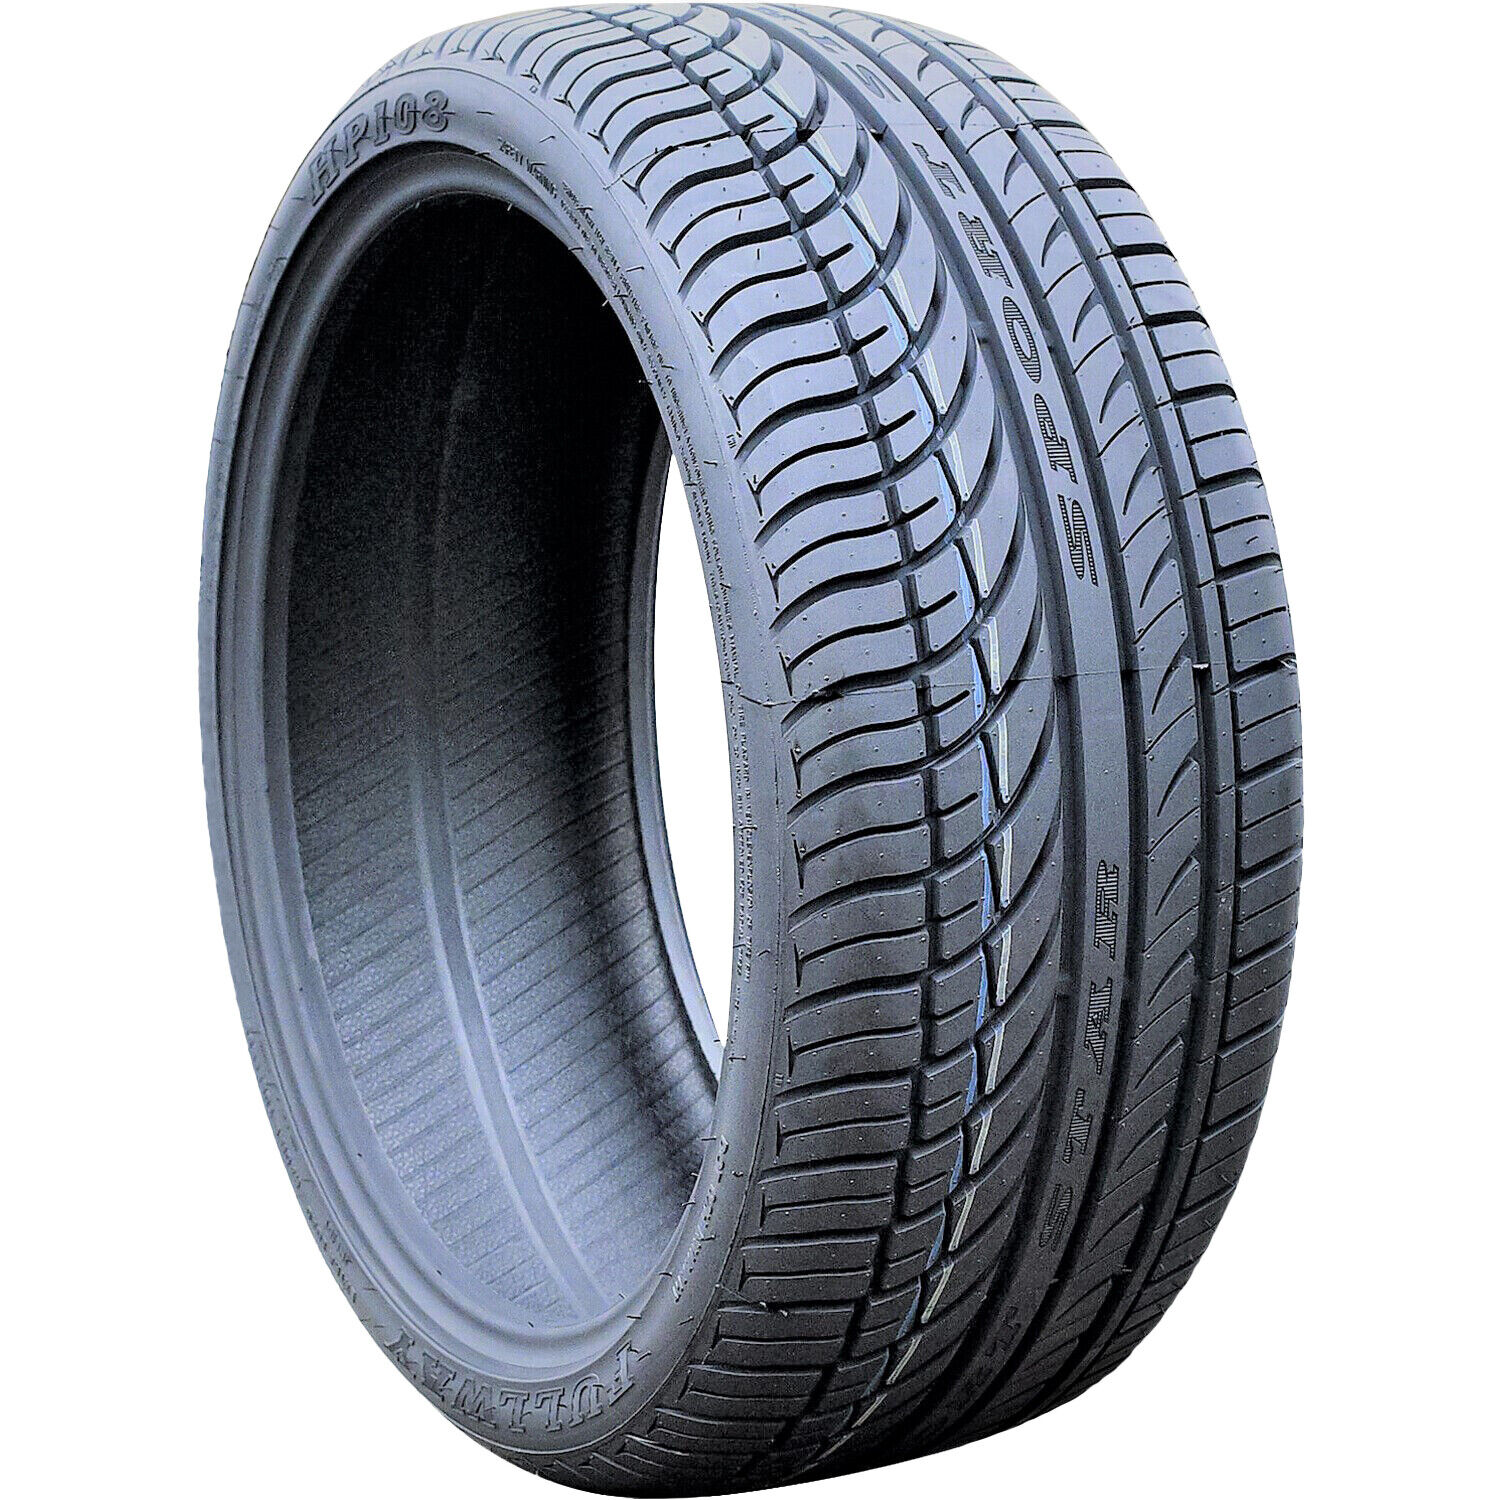 Tire Fullway HP108 225/40ZR18 225/40R18 92W XL A/S All Season Performance